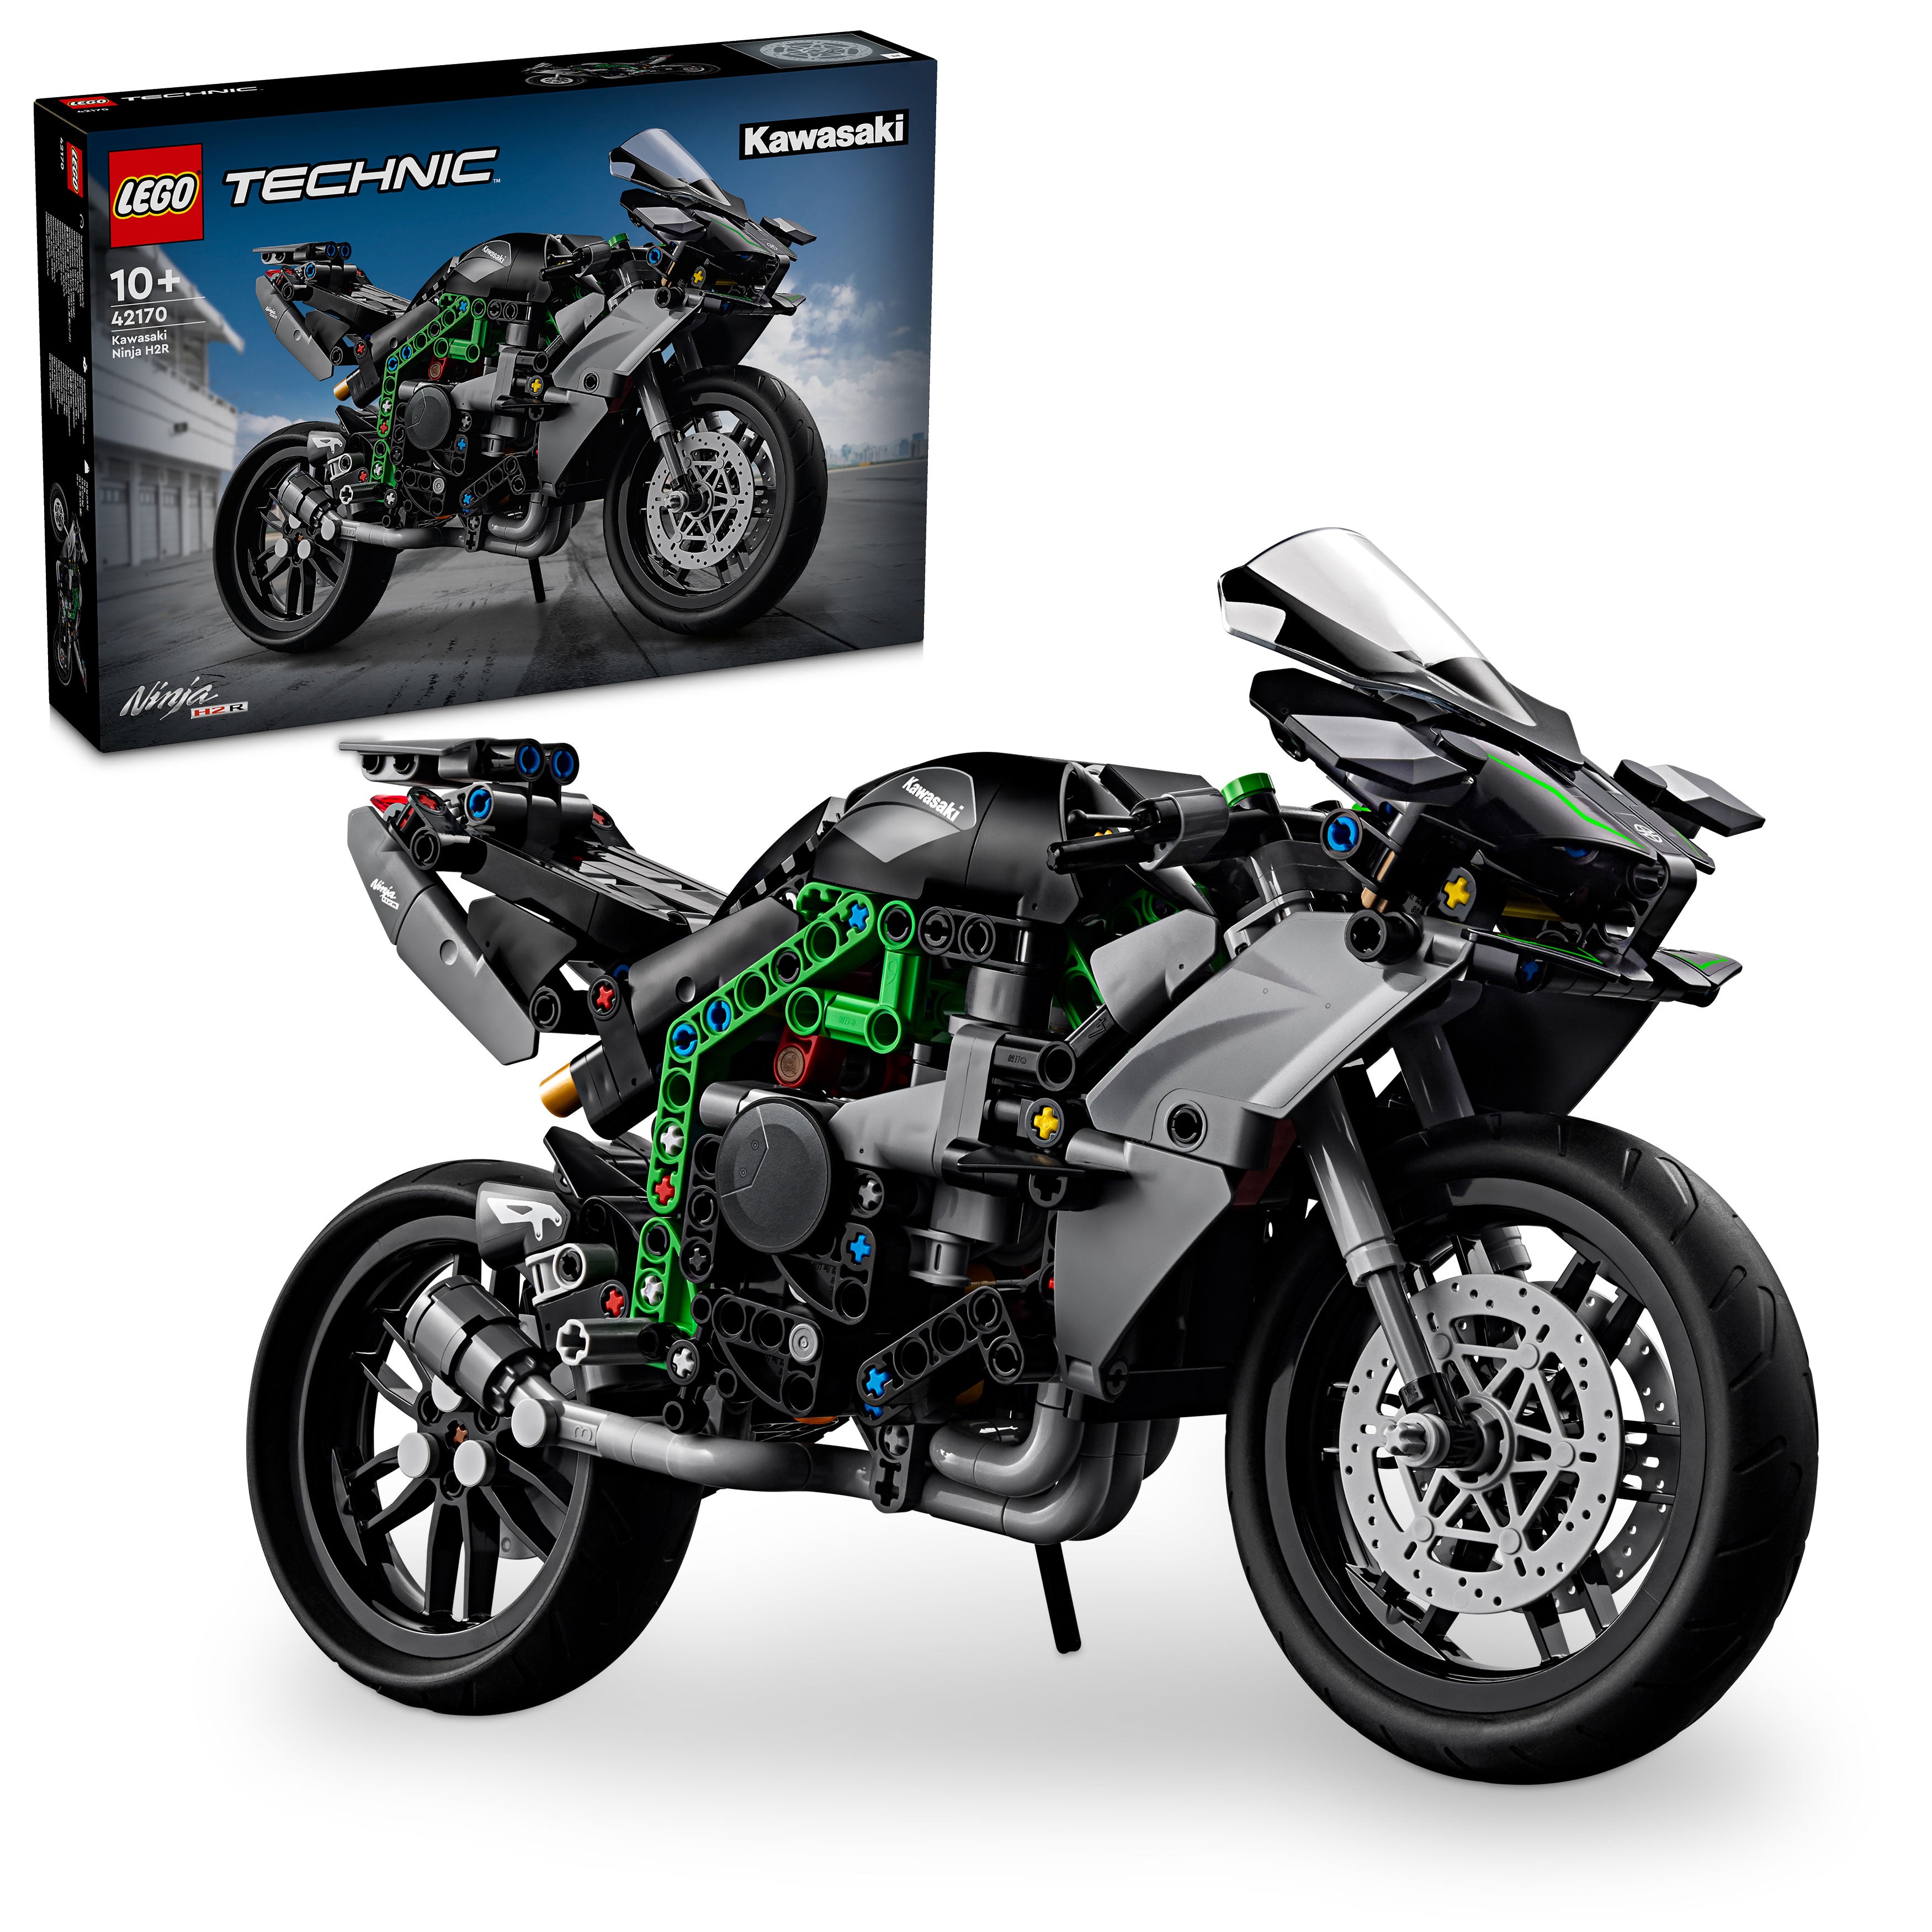 Lego 42170 Kawasaki Ninja H2R Motorbike